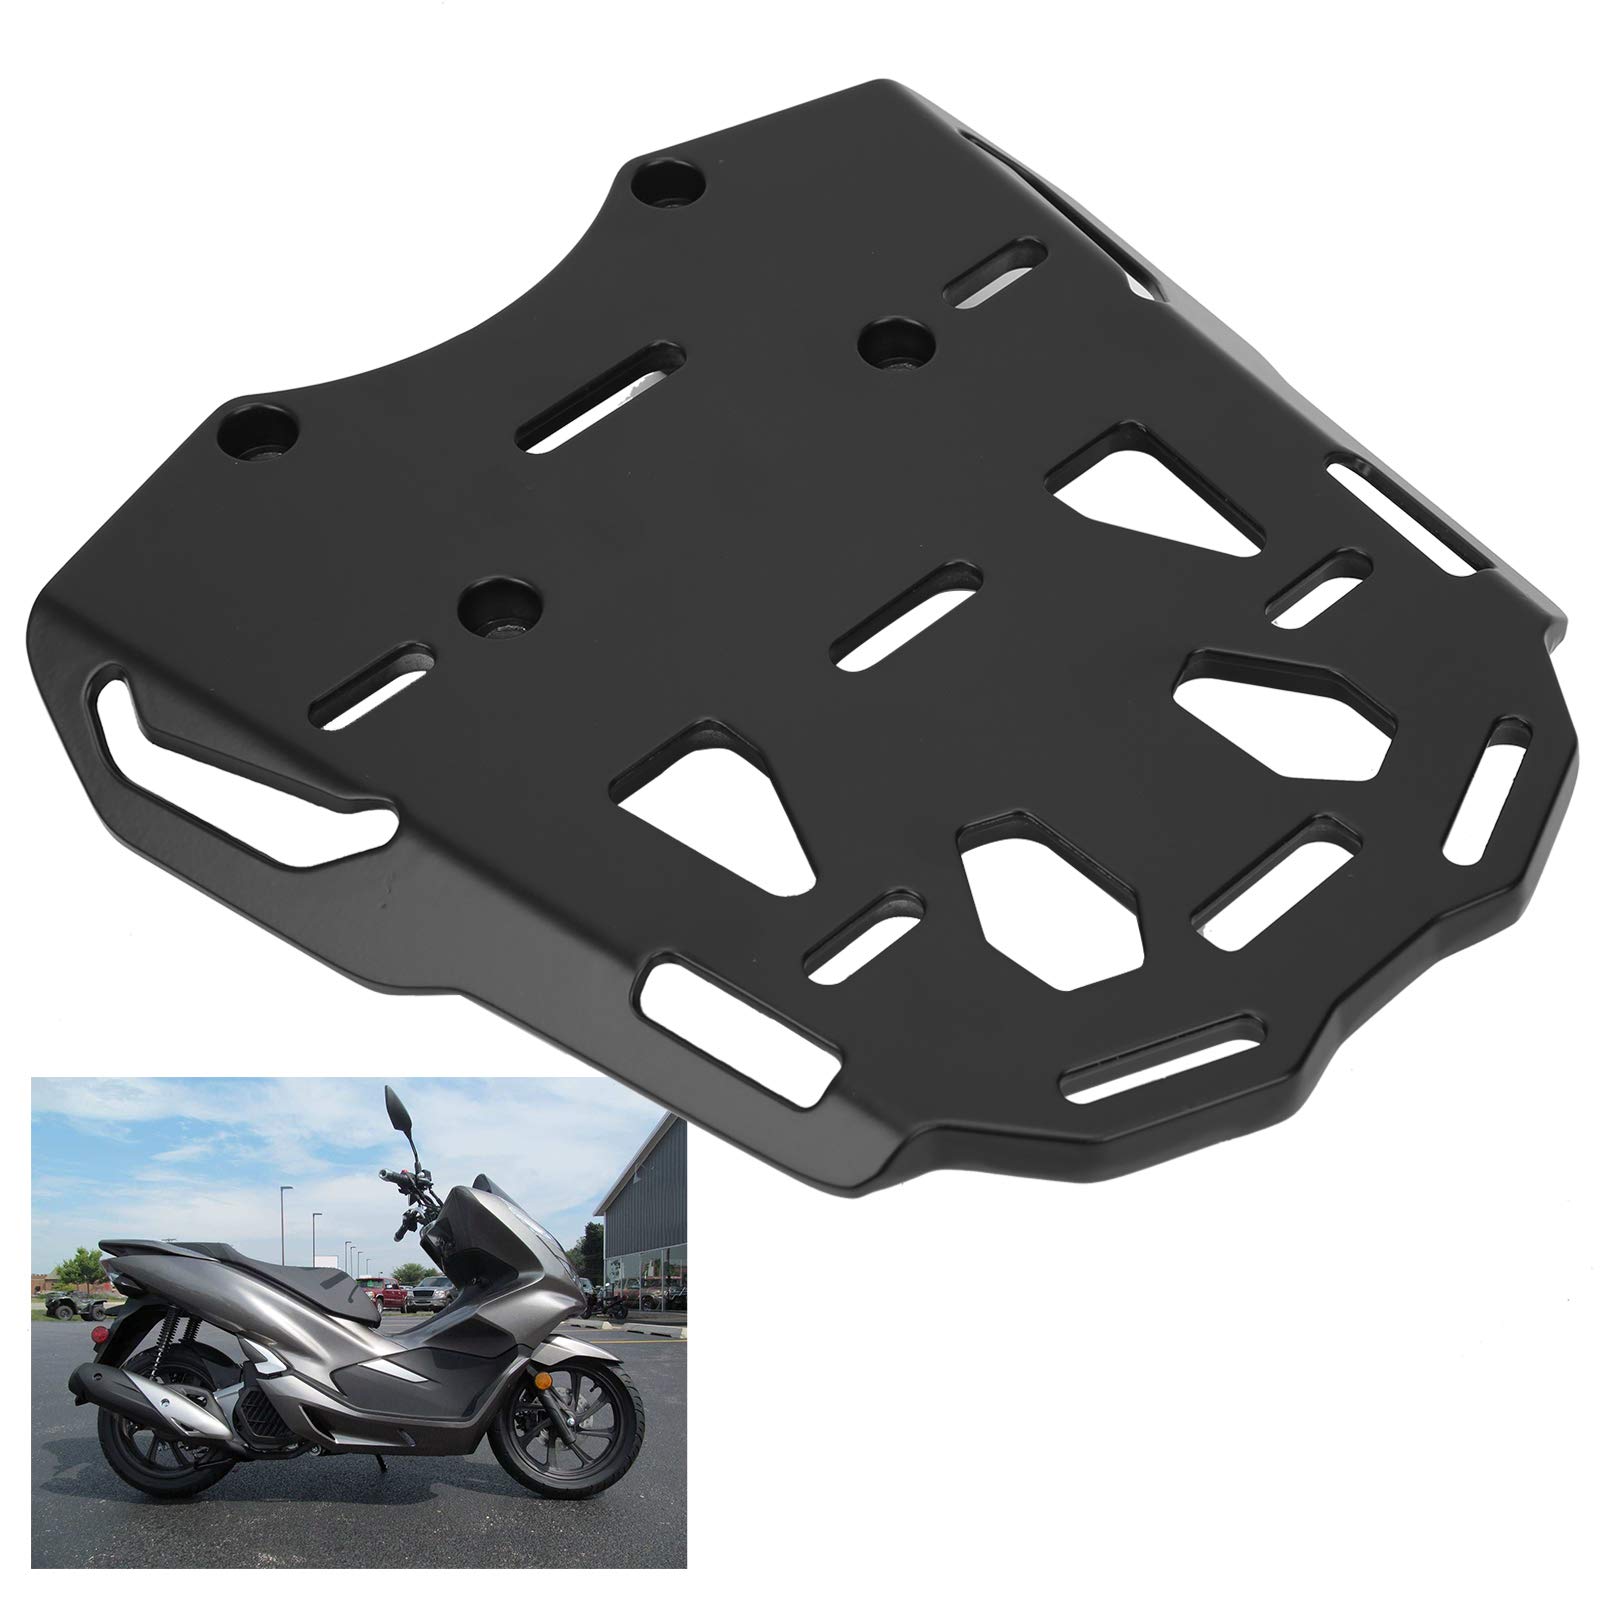 Motorcycle Rear Luggage Rack,Aluminum Alloy Rear Luggage Rack Motorcycle Accessories Fit for PCX150 2014‑2020